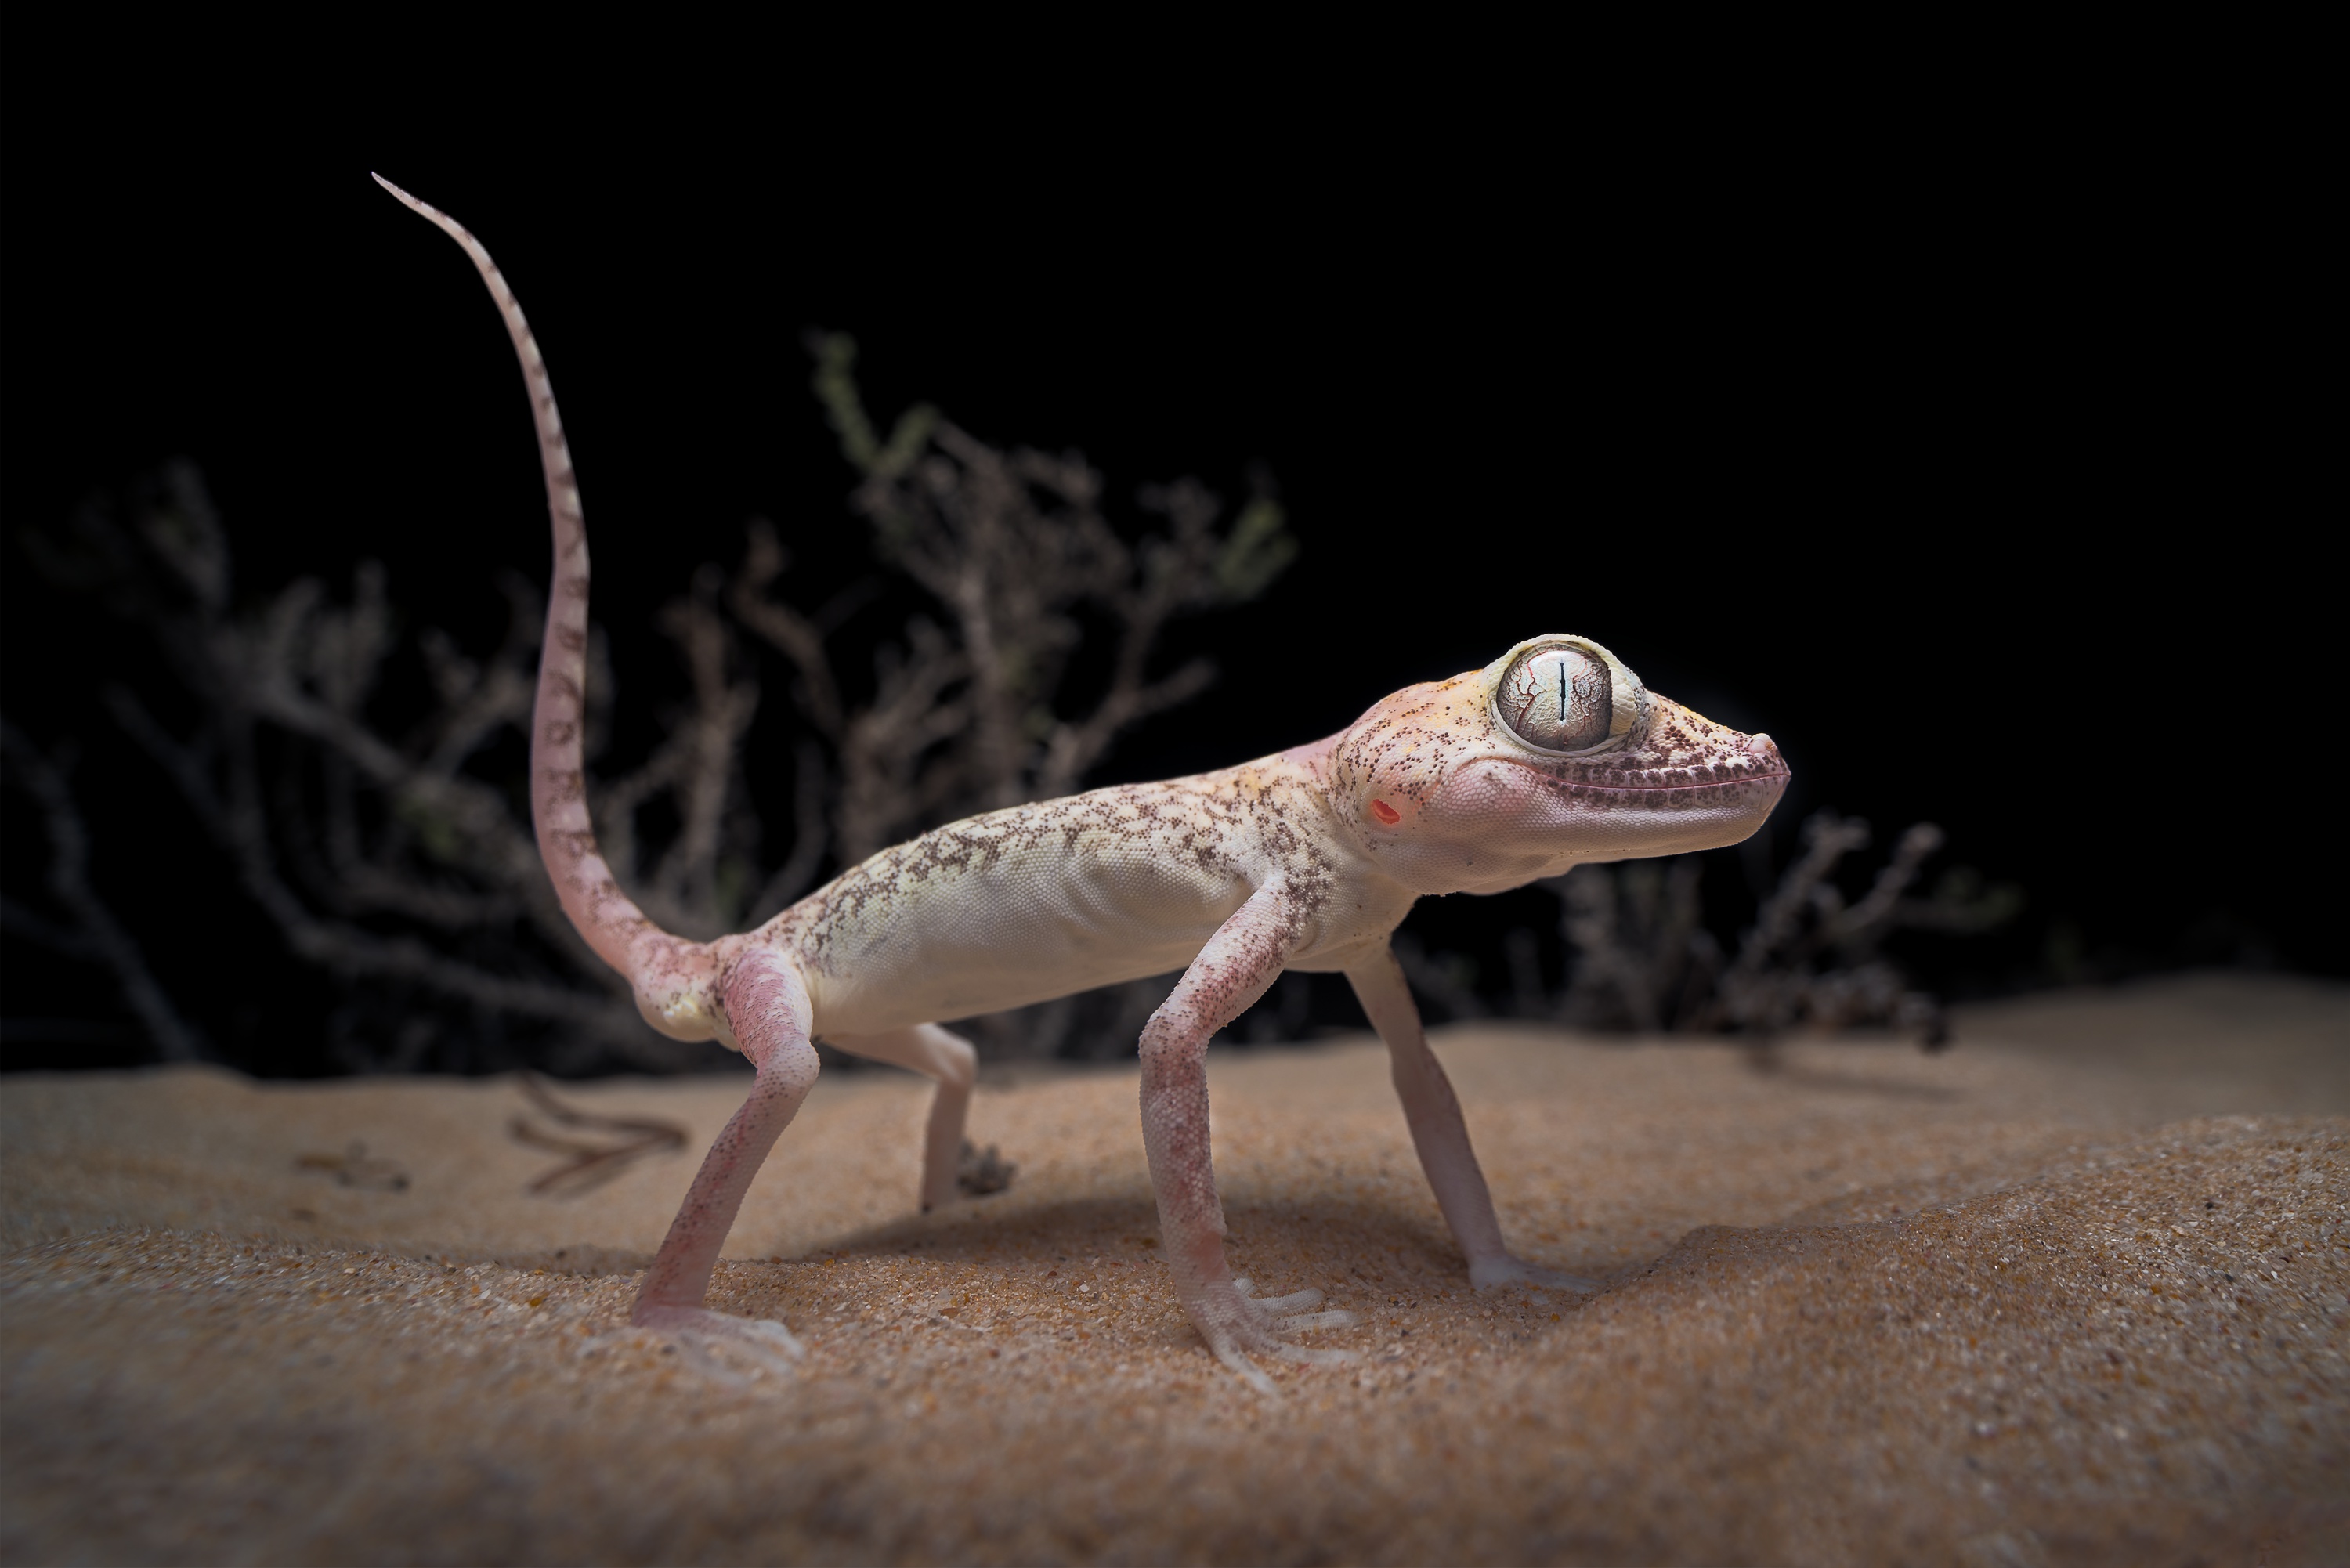 Gecko Lizard Sand 3000x2002